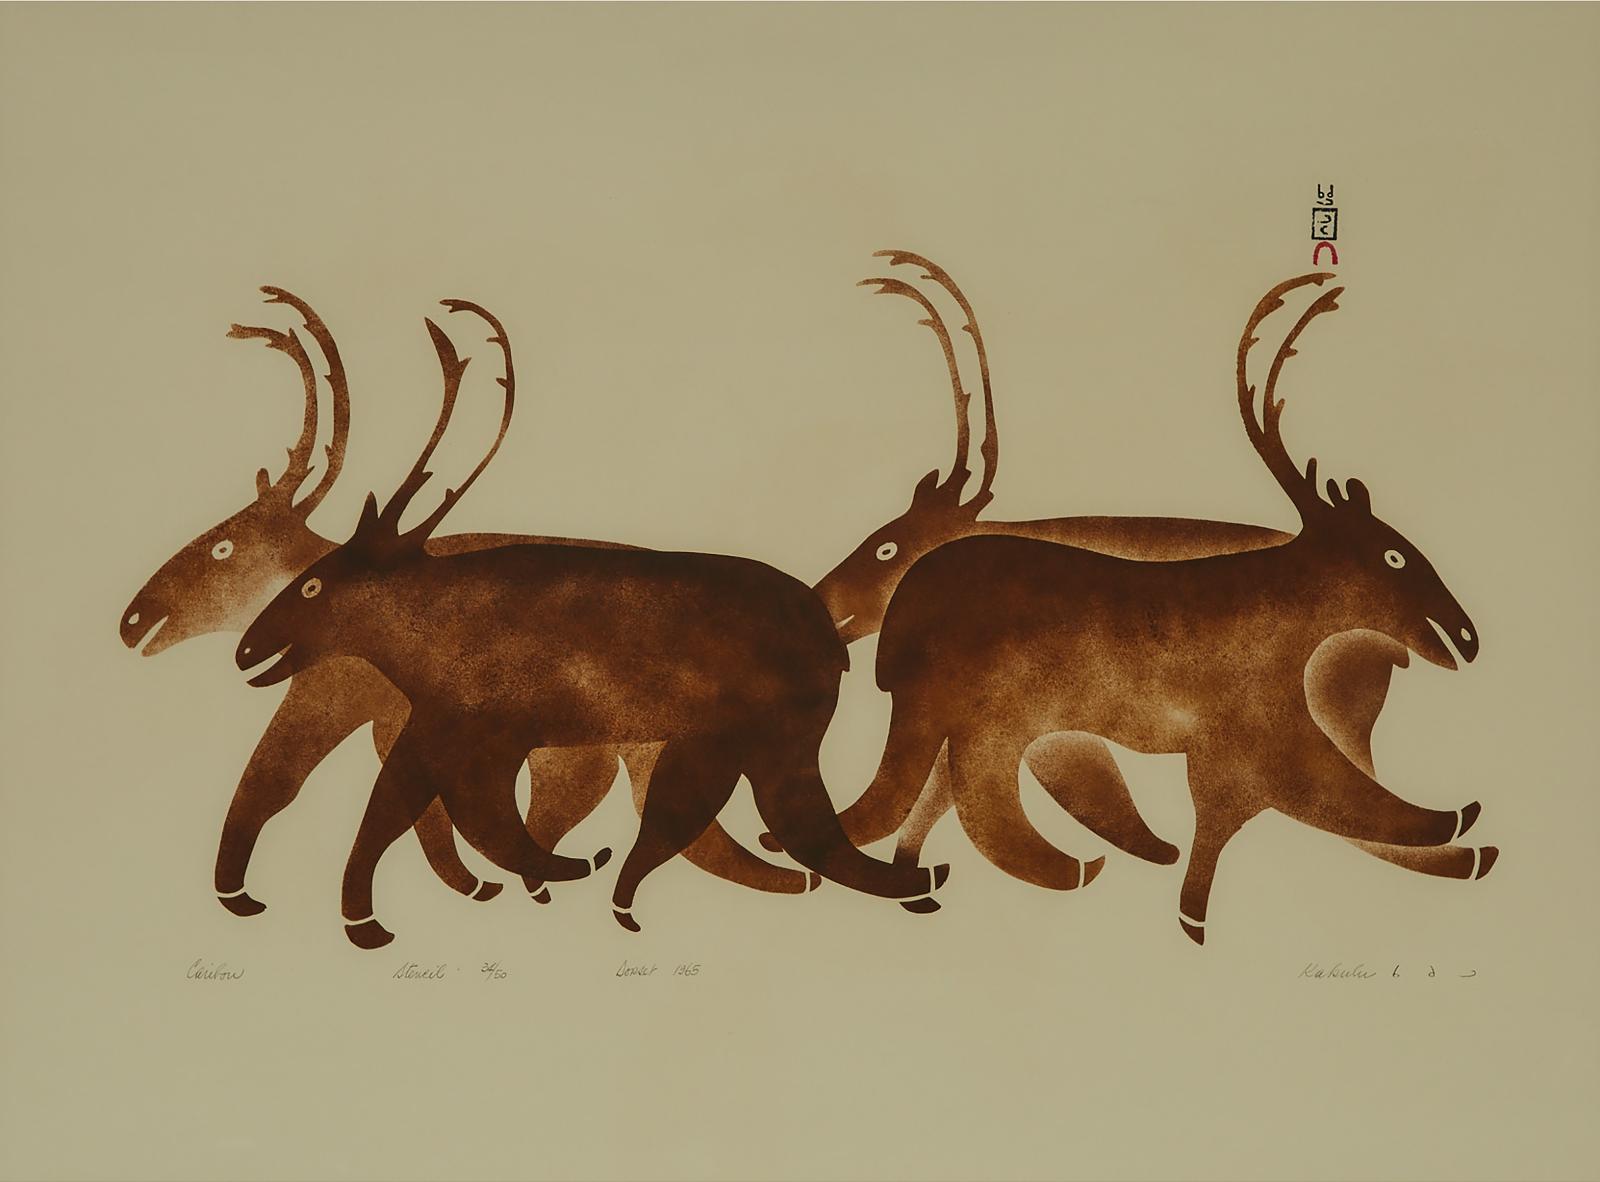 Kakulu Saggiaktok Sagiatuk (1940-2020) - Caribou